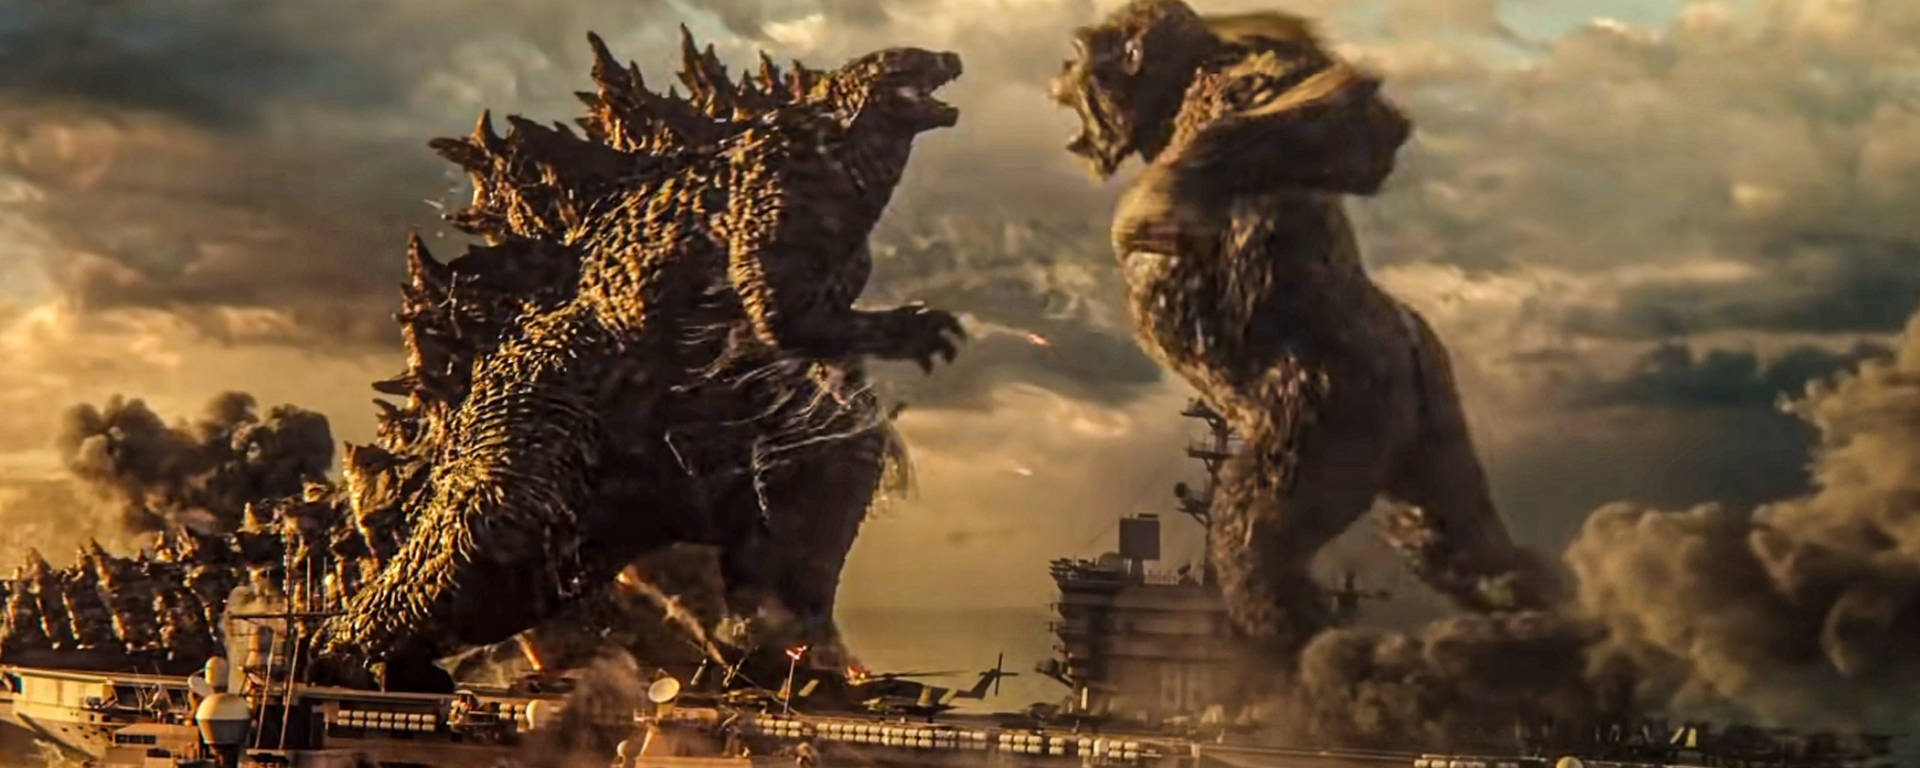 Godzilla mod Kong wallpaper Wallpaper